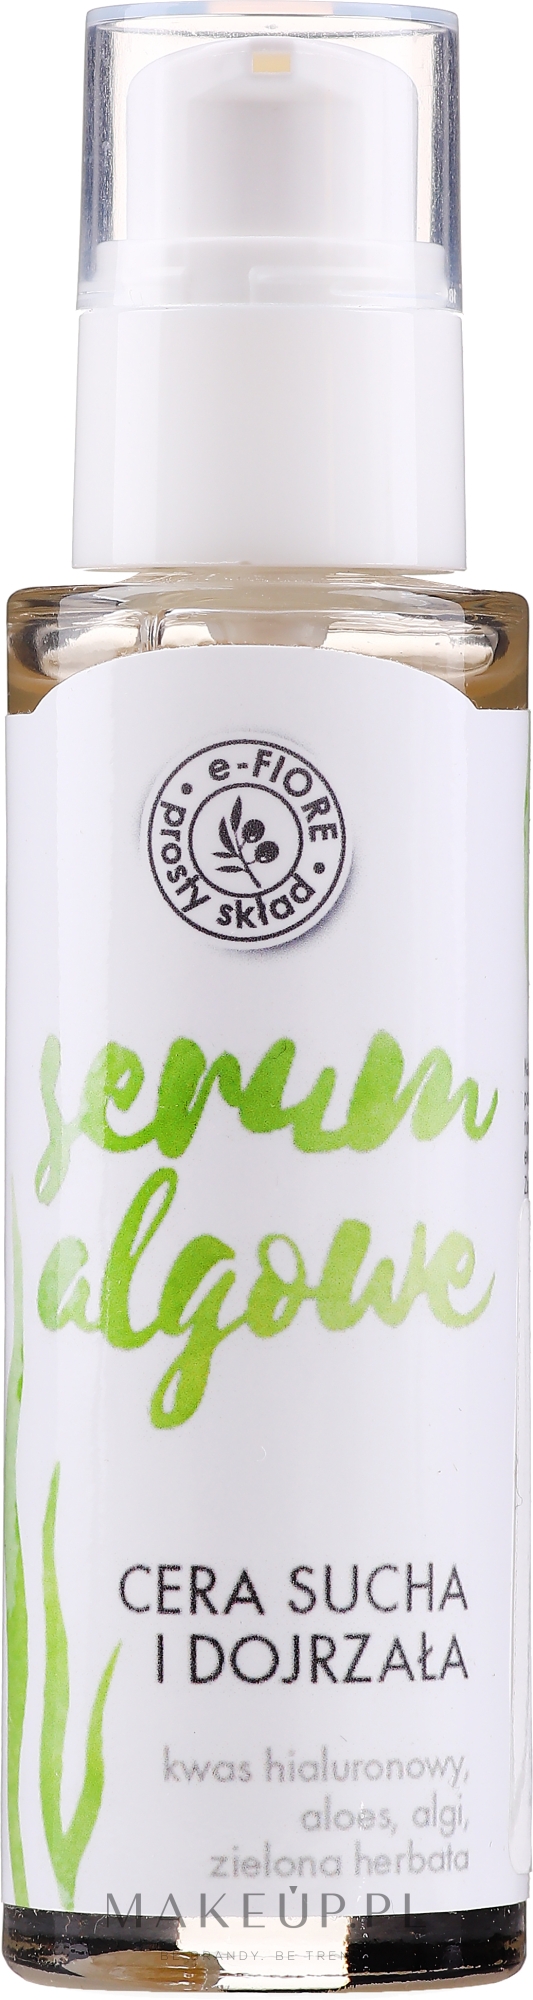 Serum hialuronowe do twarzy Algi i zielona herbata - E-Fiore Serum — Zdjęcie 30 ml